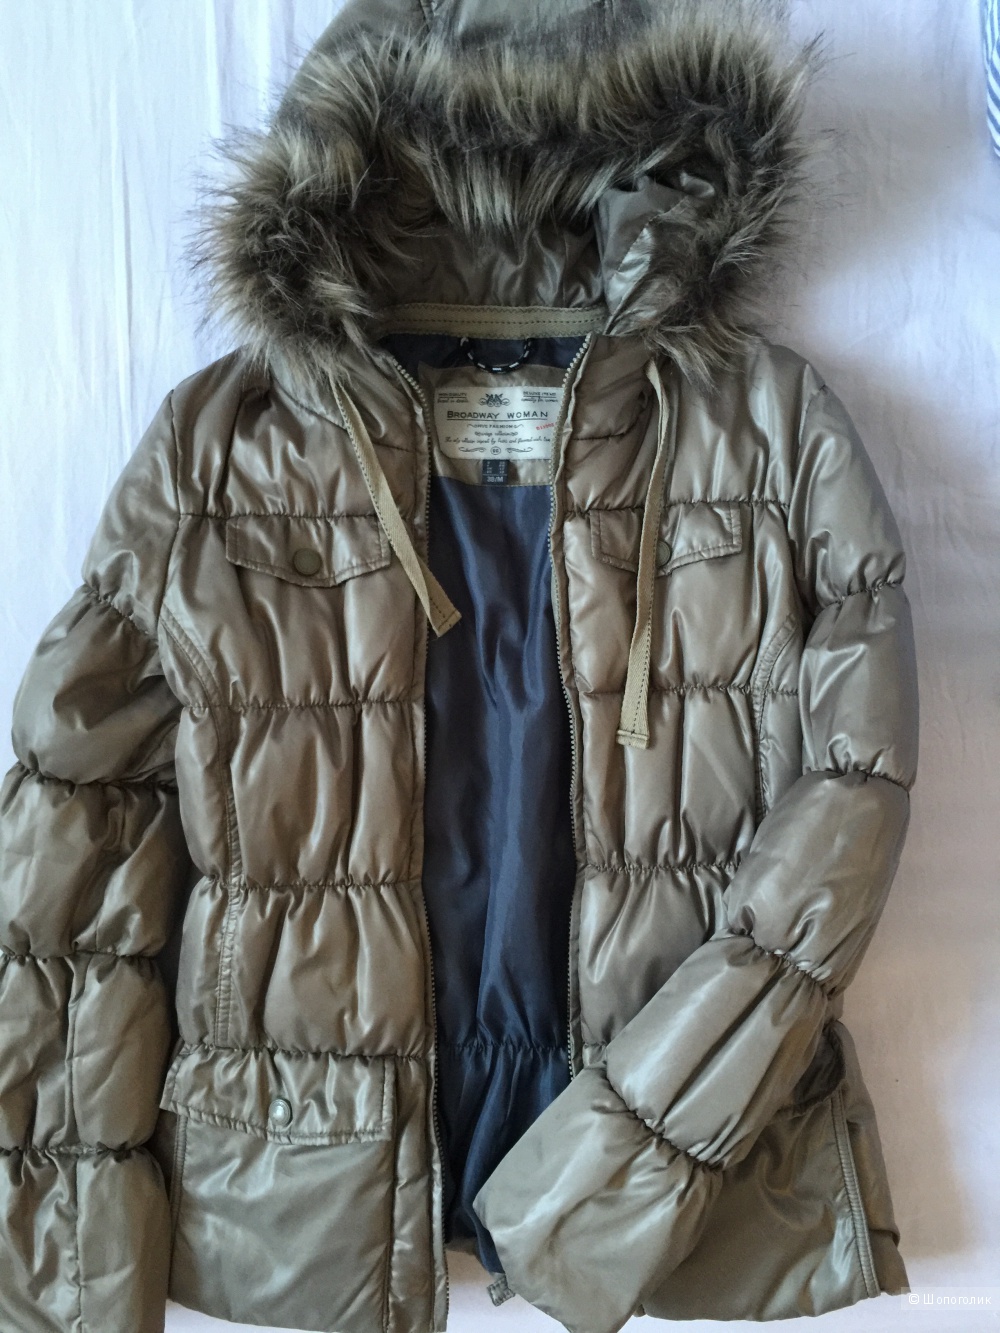 Куртка зимняя Broadway woman размер 38